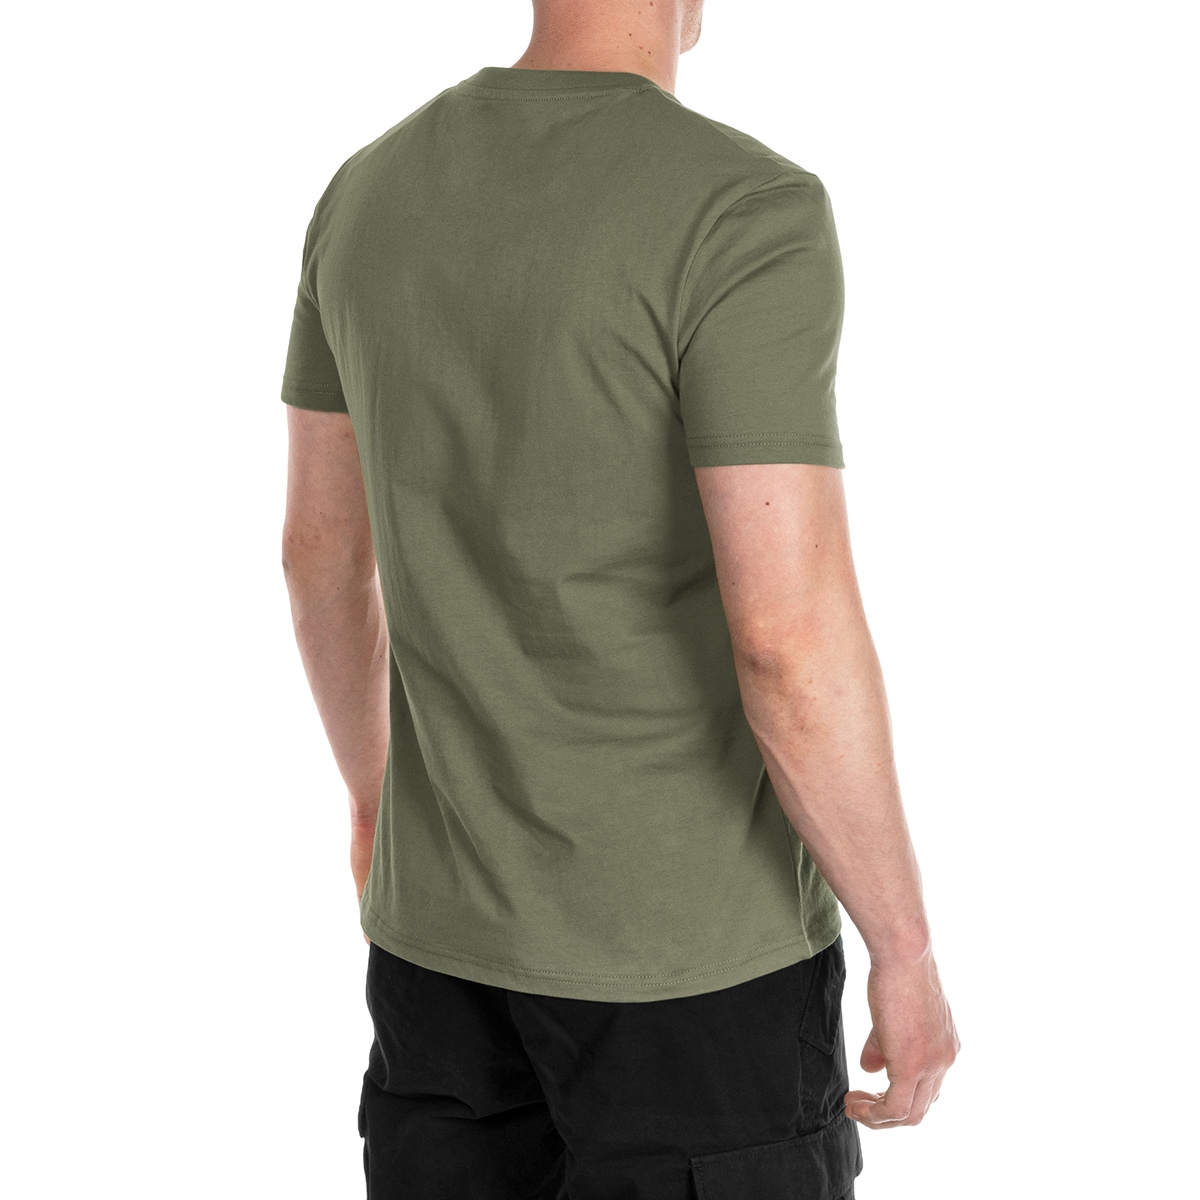 Koszulka T-shirt Helikon Foliage Green